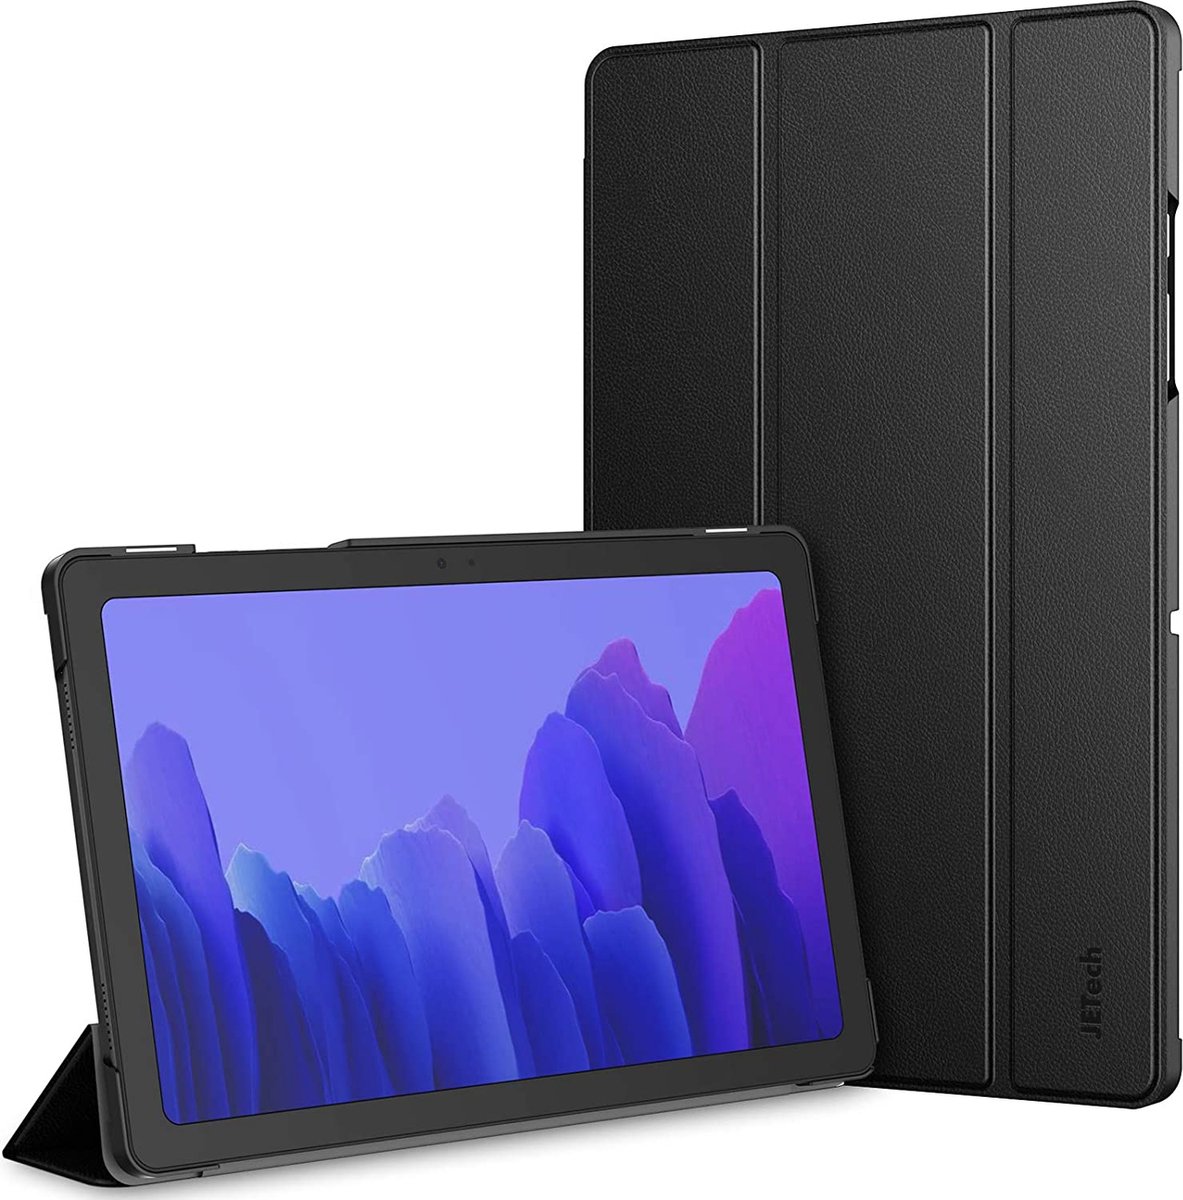 Hoes compatibel met Samsung Galaxy Tab A7 10,4 inch 2020 (SM-T500 / T505 / T507), zwart